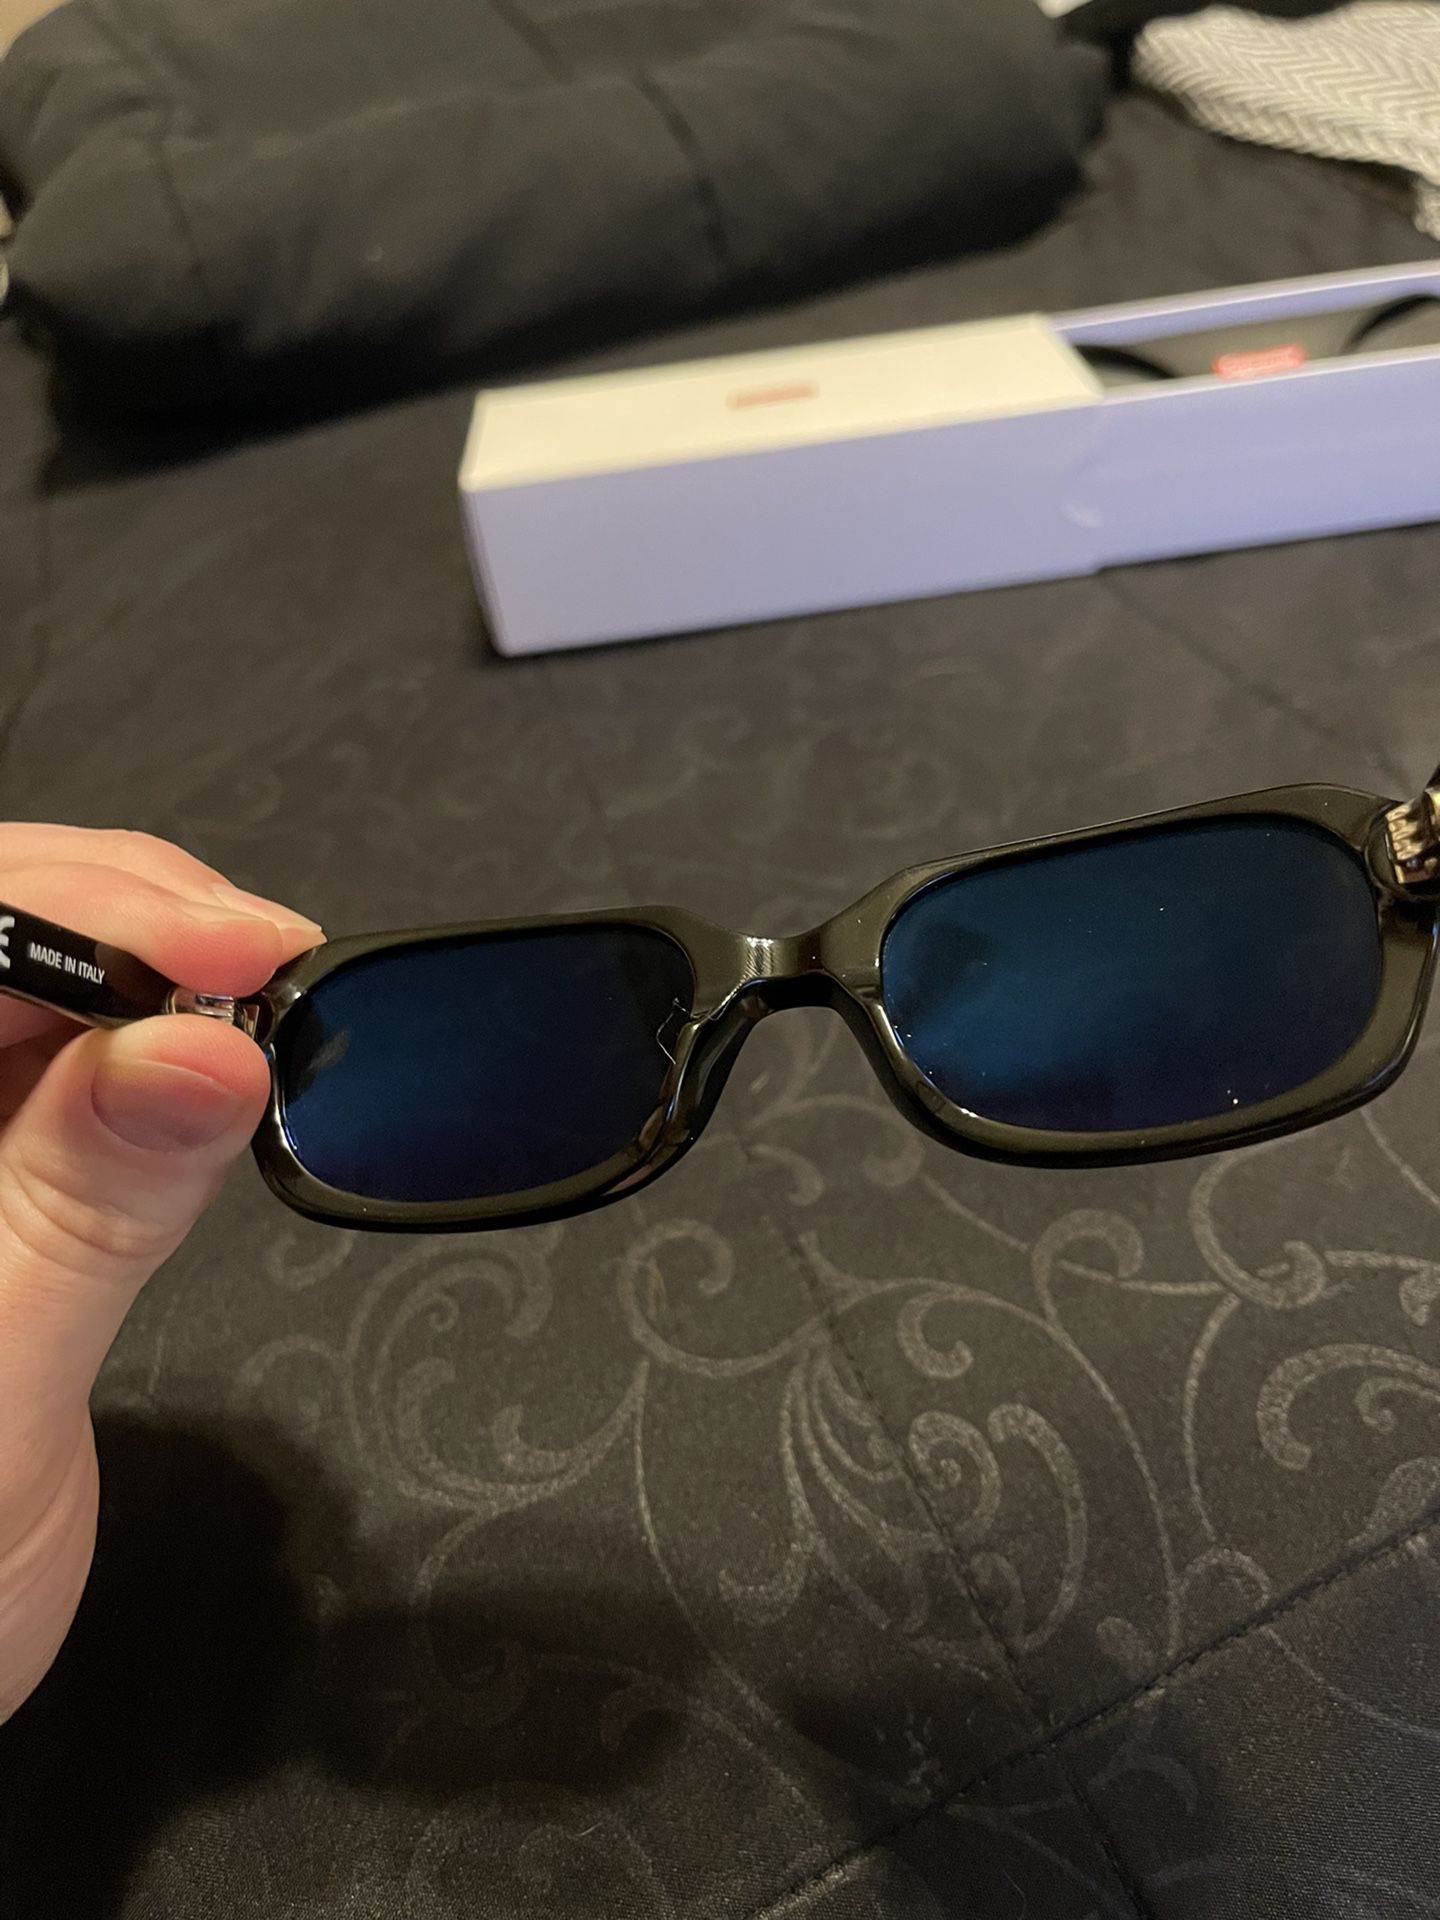 Supreme Vega Sunglasses Black for Sale in Chandler, AZ - OfferUp